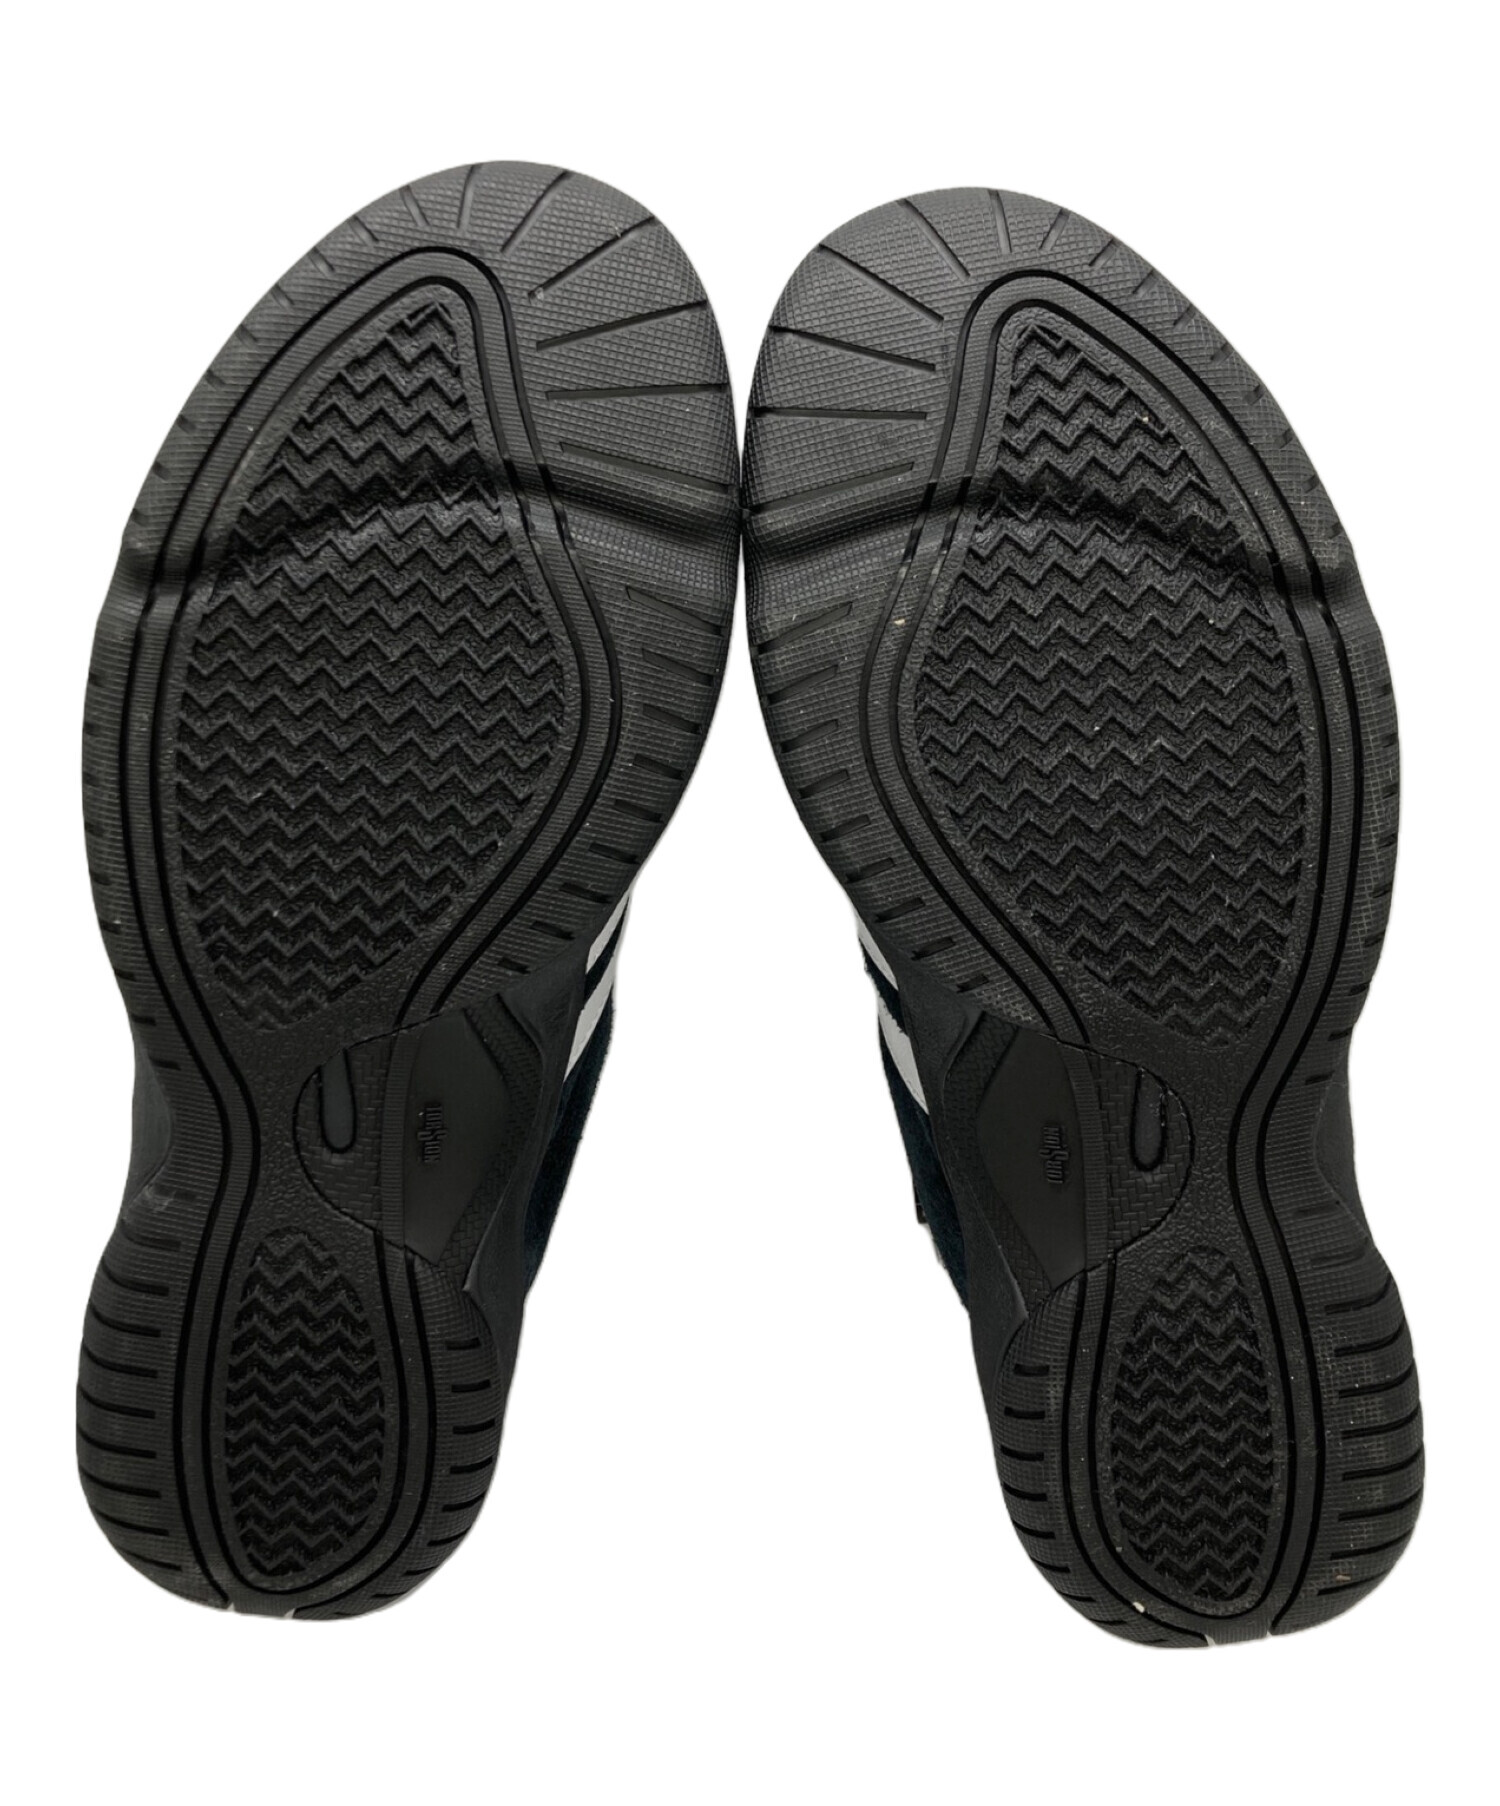 adidas (アディダス) ATMOS (アトモス) CAMPUS SUPREME SOLE ATMOS ブラック サイズ:US9